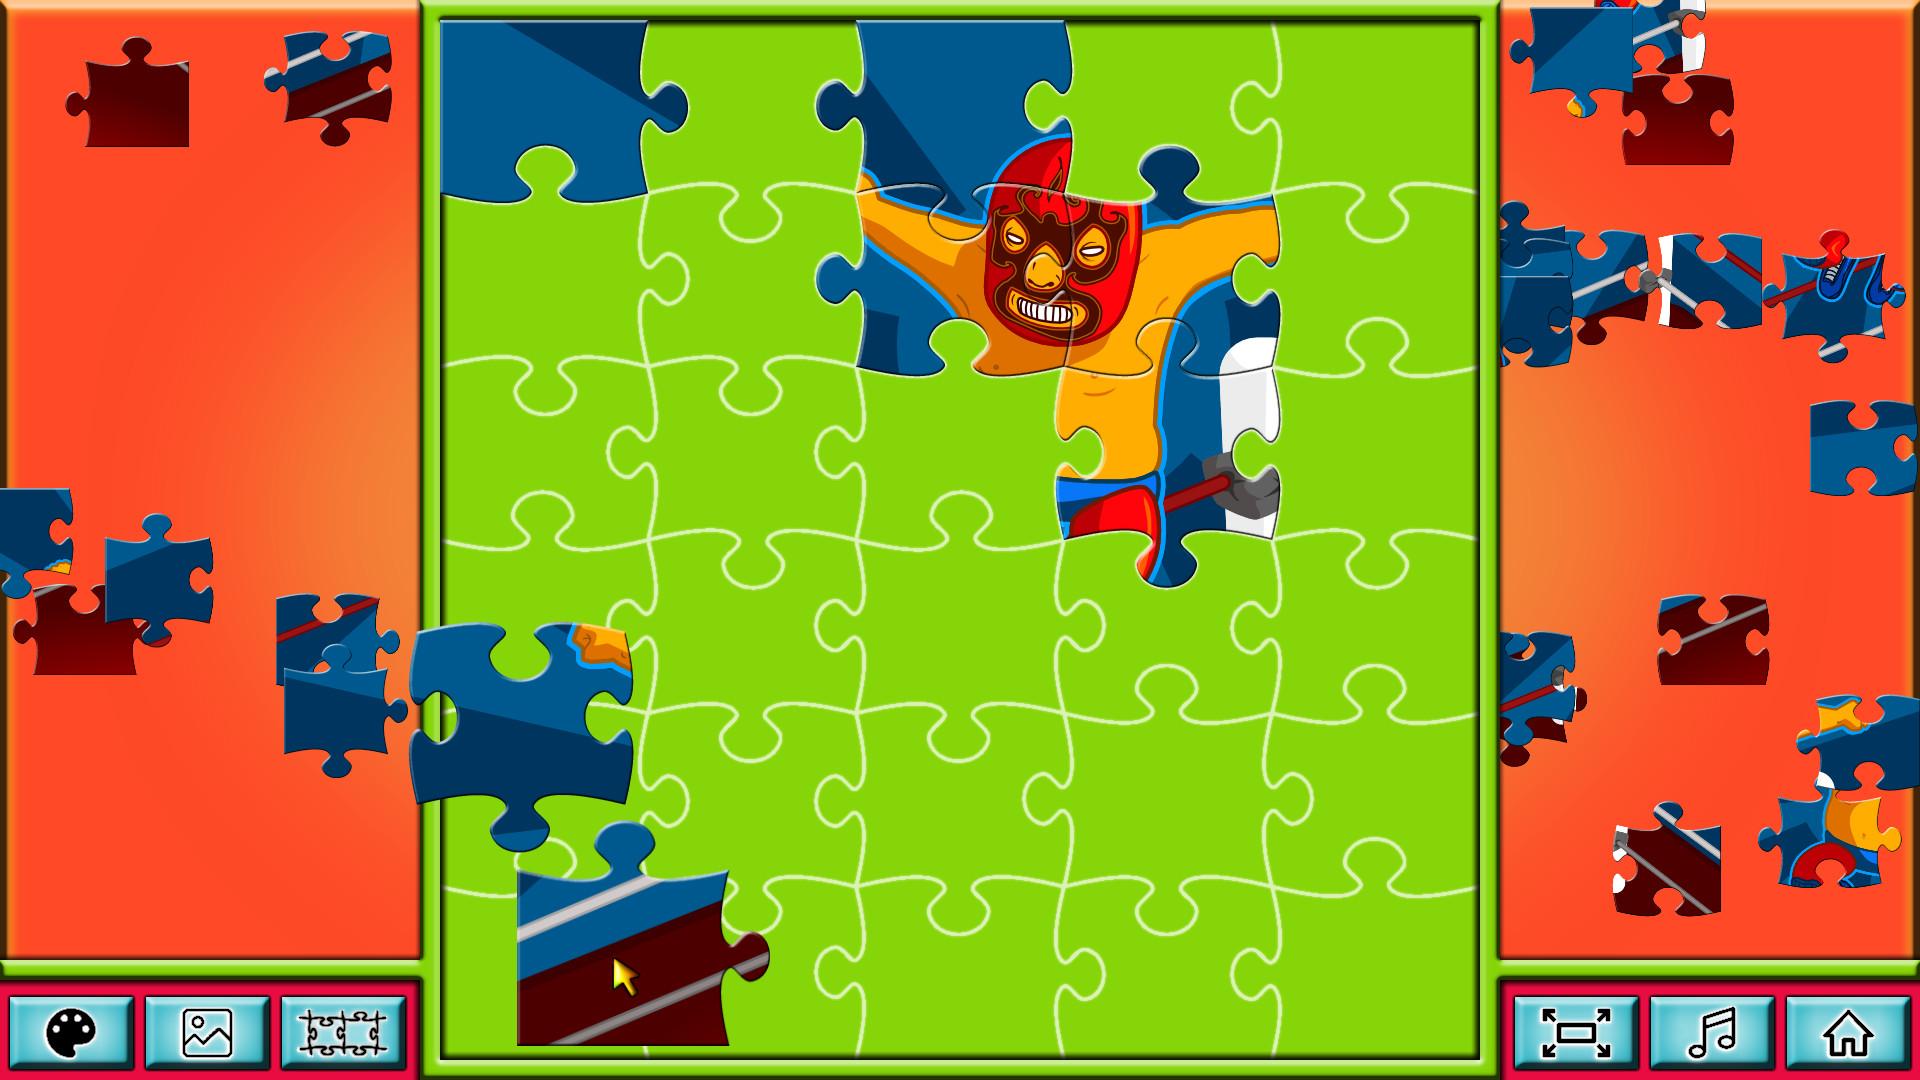 Screenshot №7 from game Pixel Puzzles Junior Jigsaw